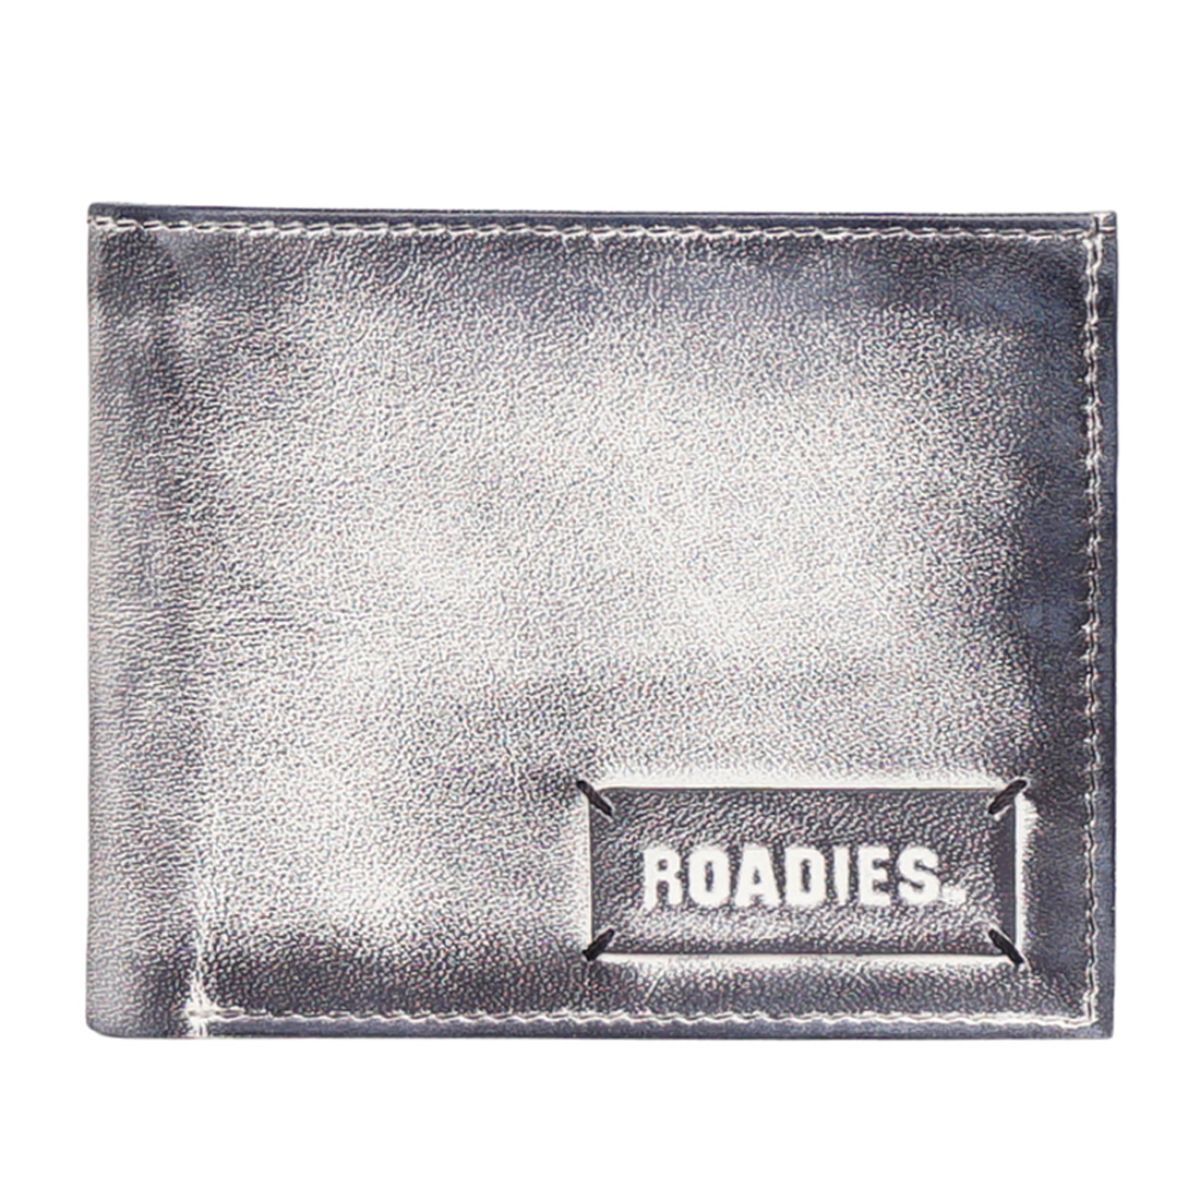 Justanned Roadies By Smokey Dual Tone Biker Men'S Leather Wallet